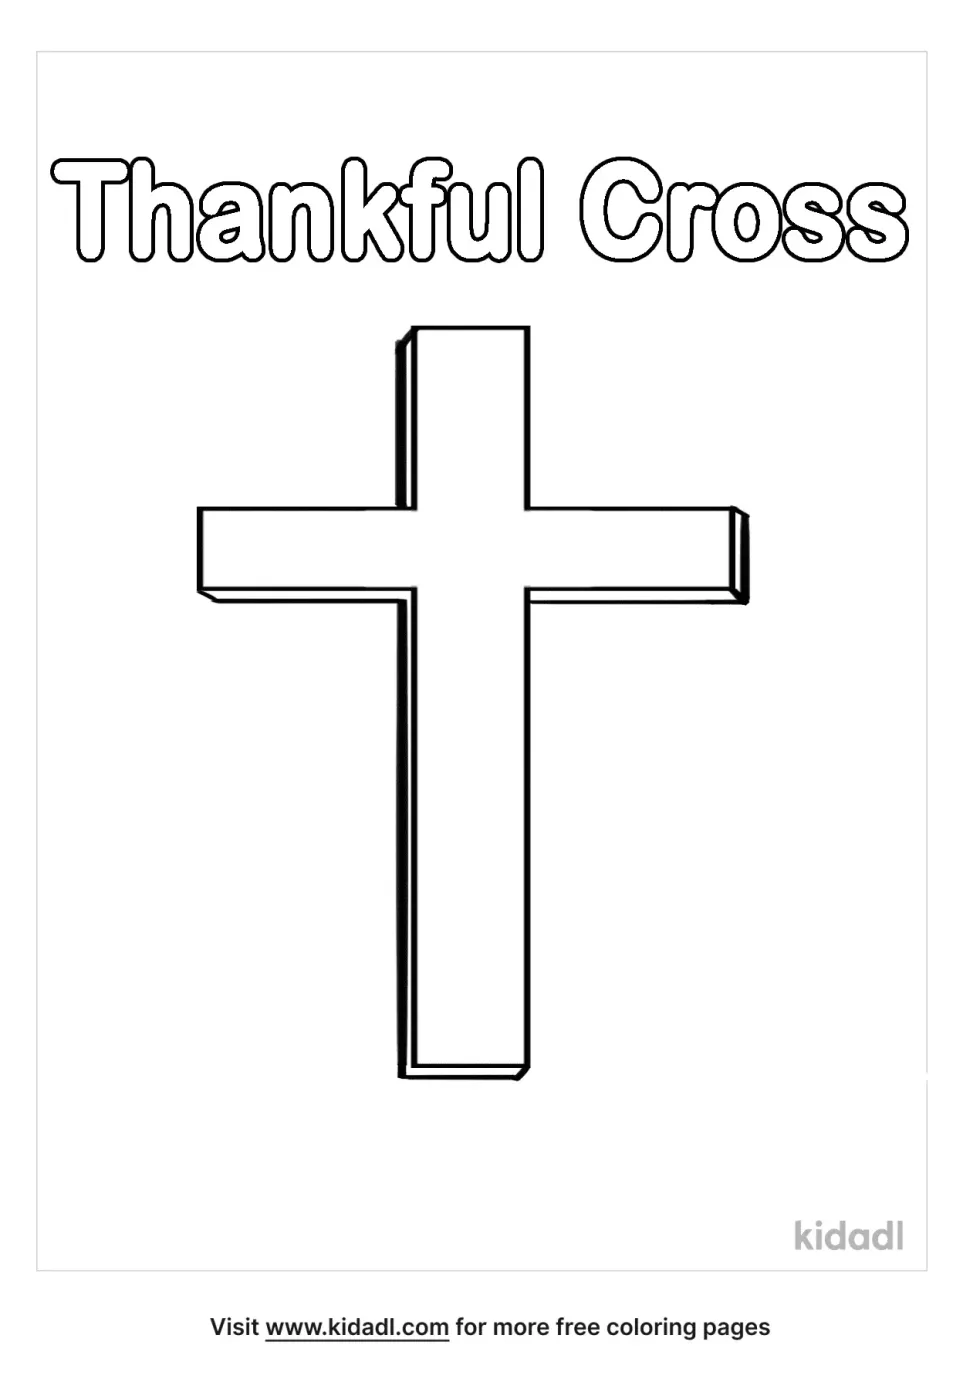 Thankful Cross